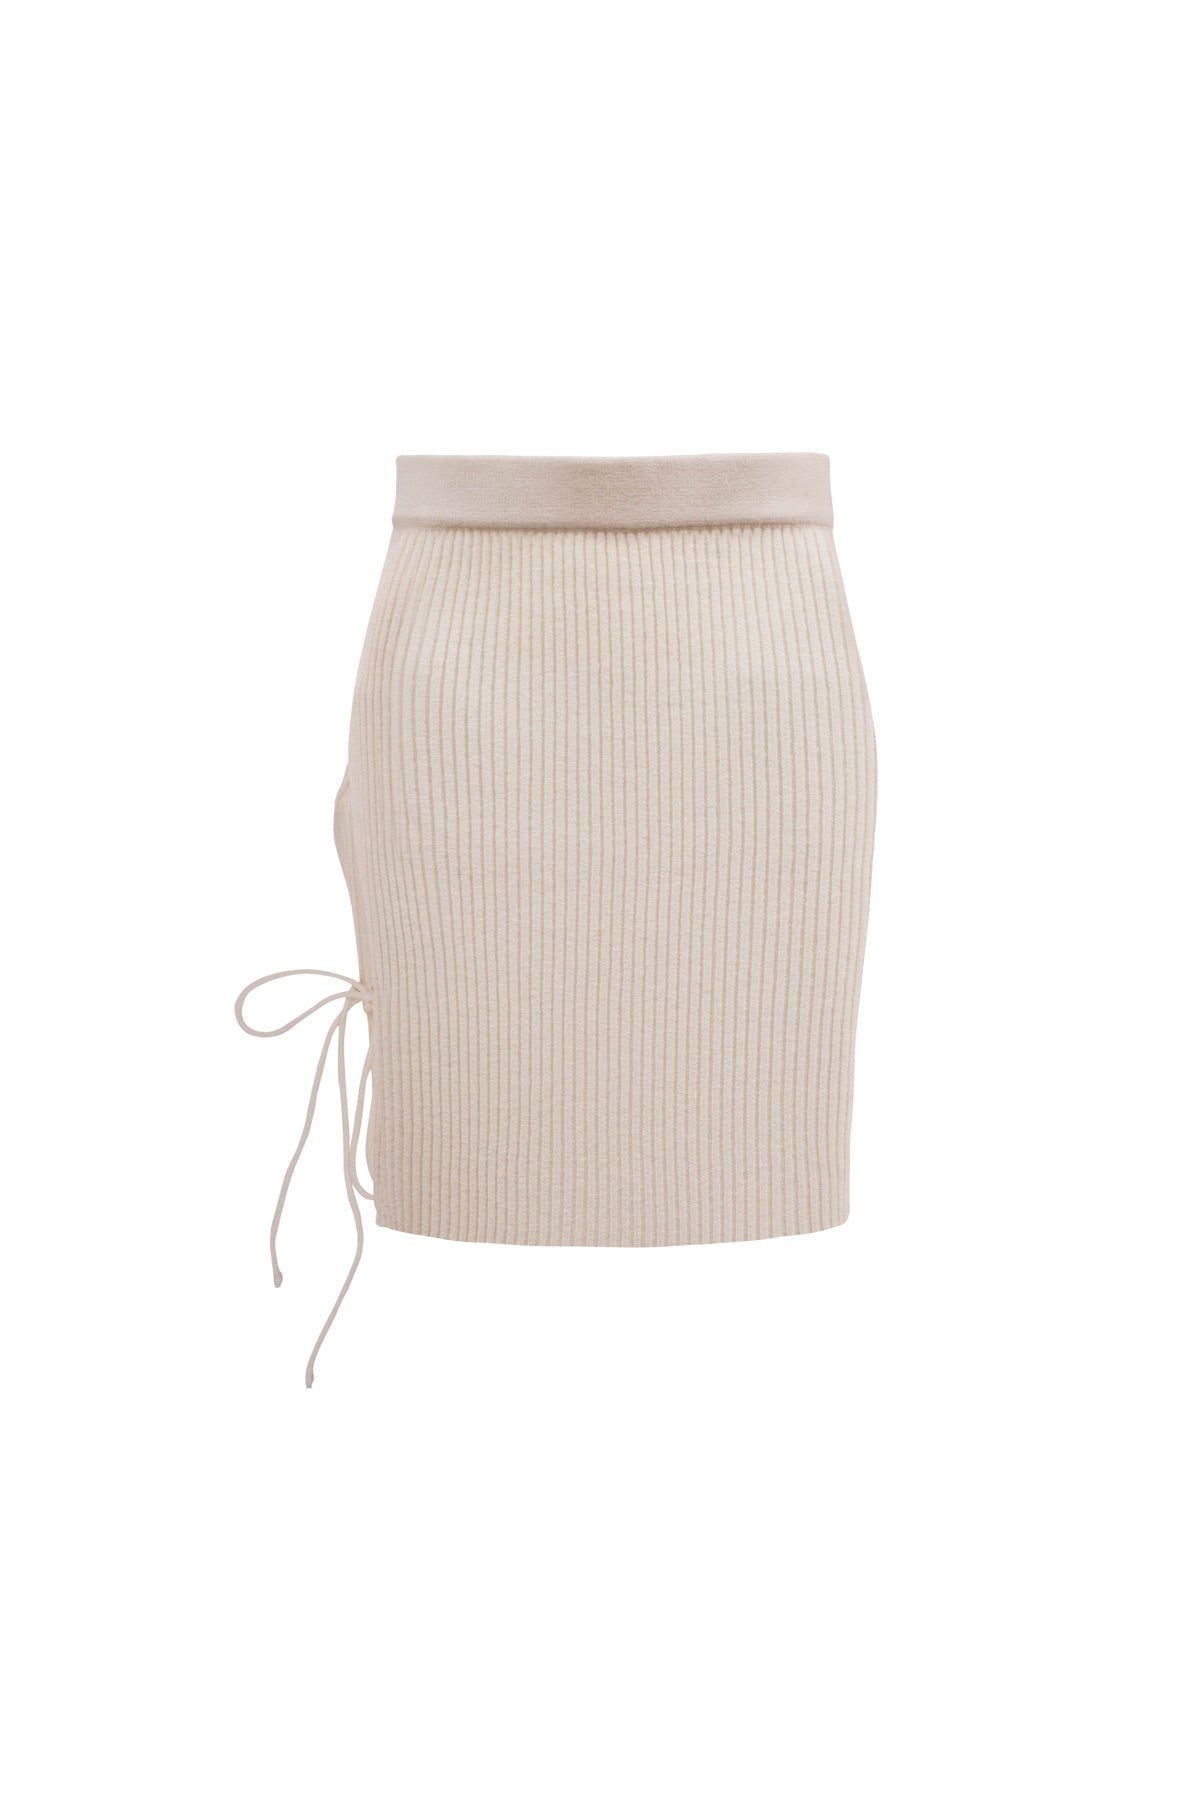 APPAREL - Pacific Skirt (Bone)